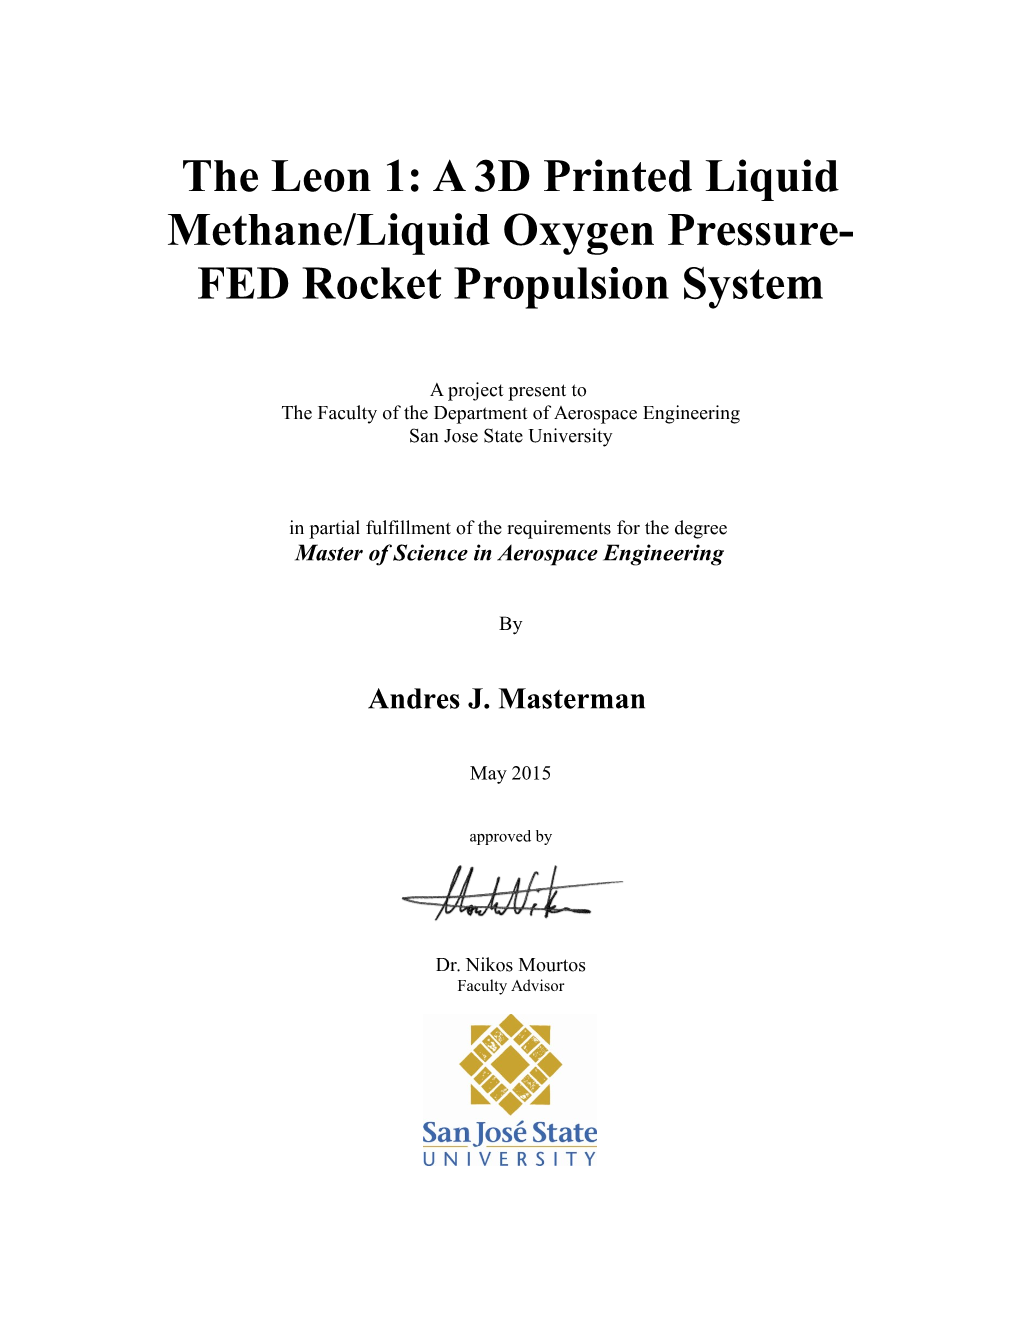 The Leon 1: a 3D Printed Liquid Methane/Liquid Oxygen Pressure- FED Rocket Propulsion System